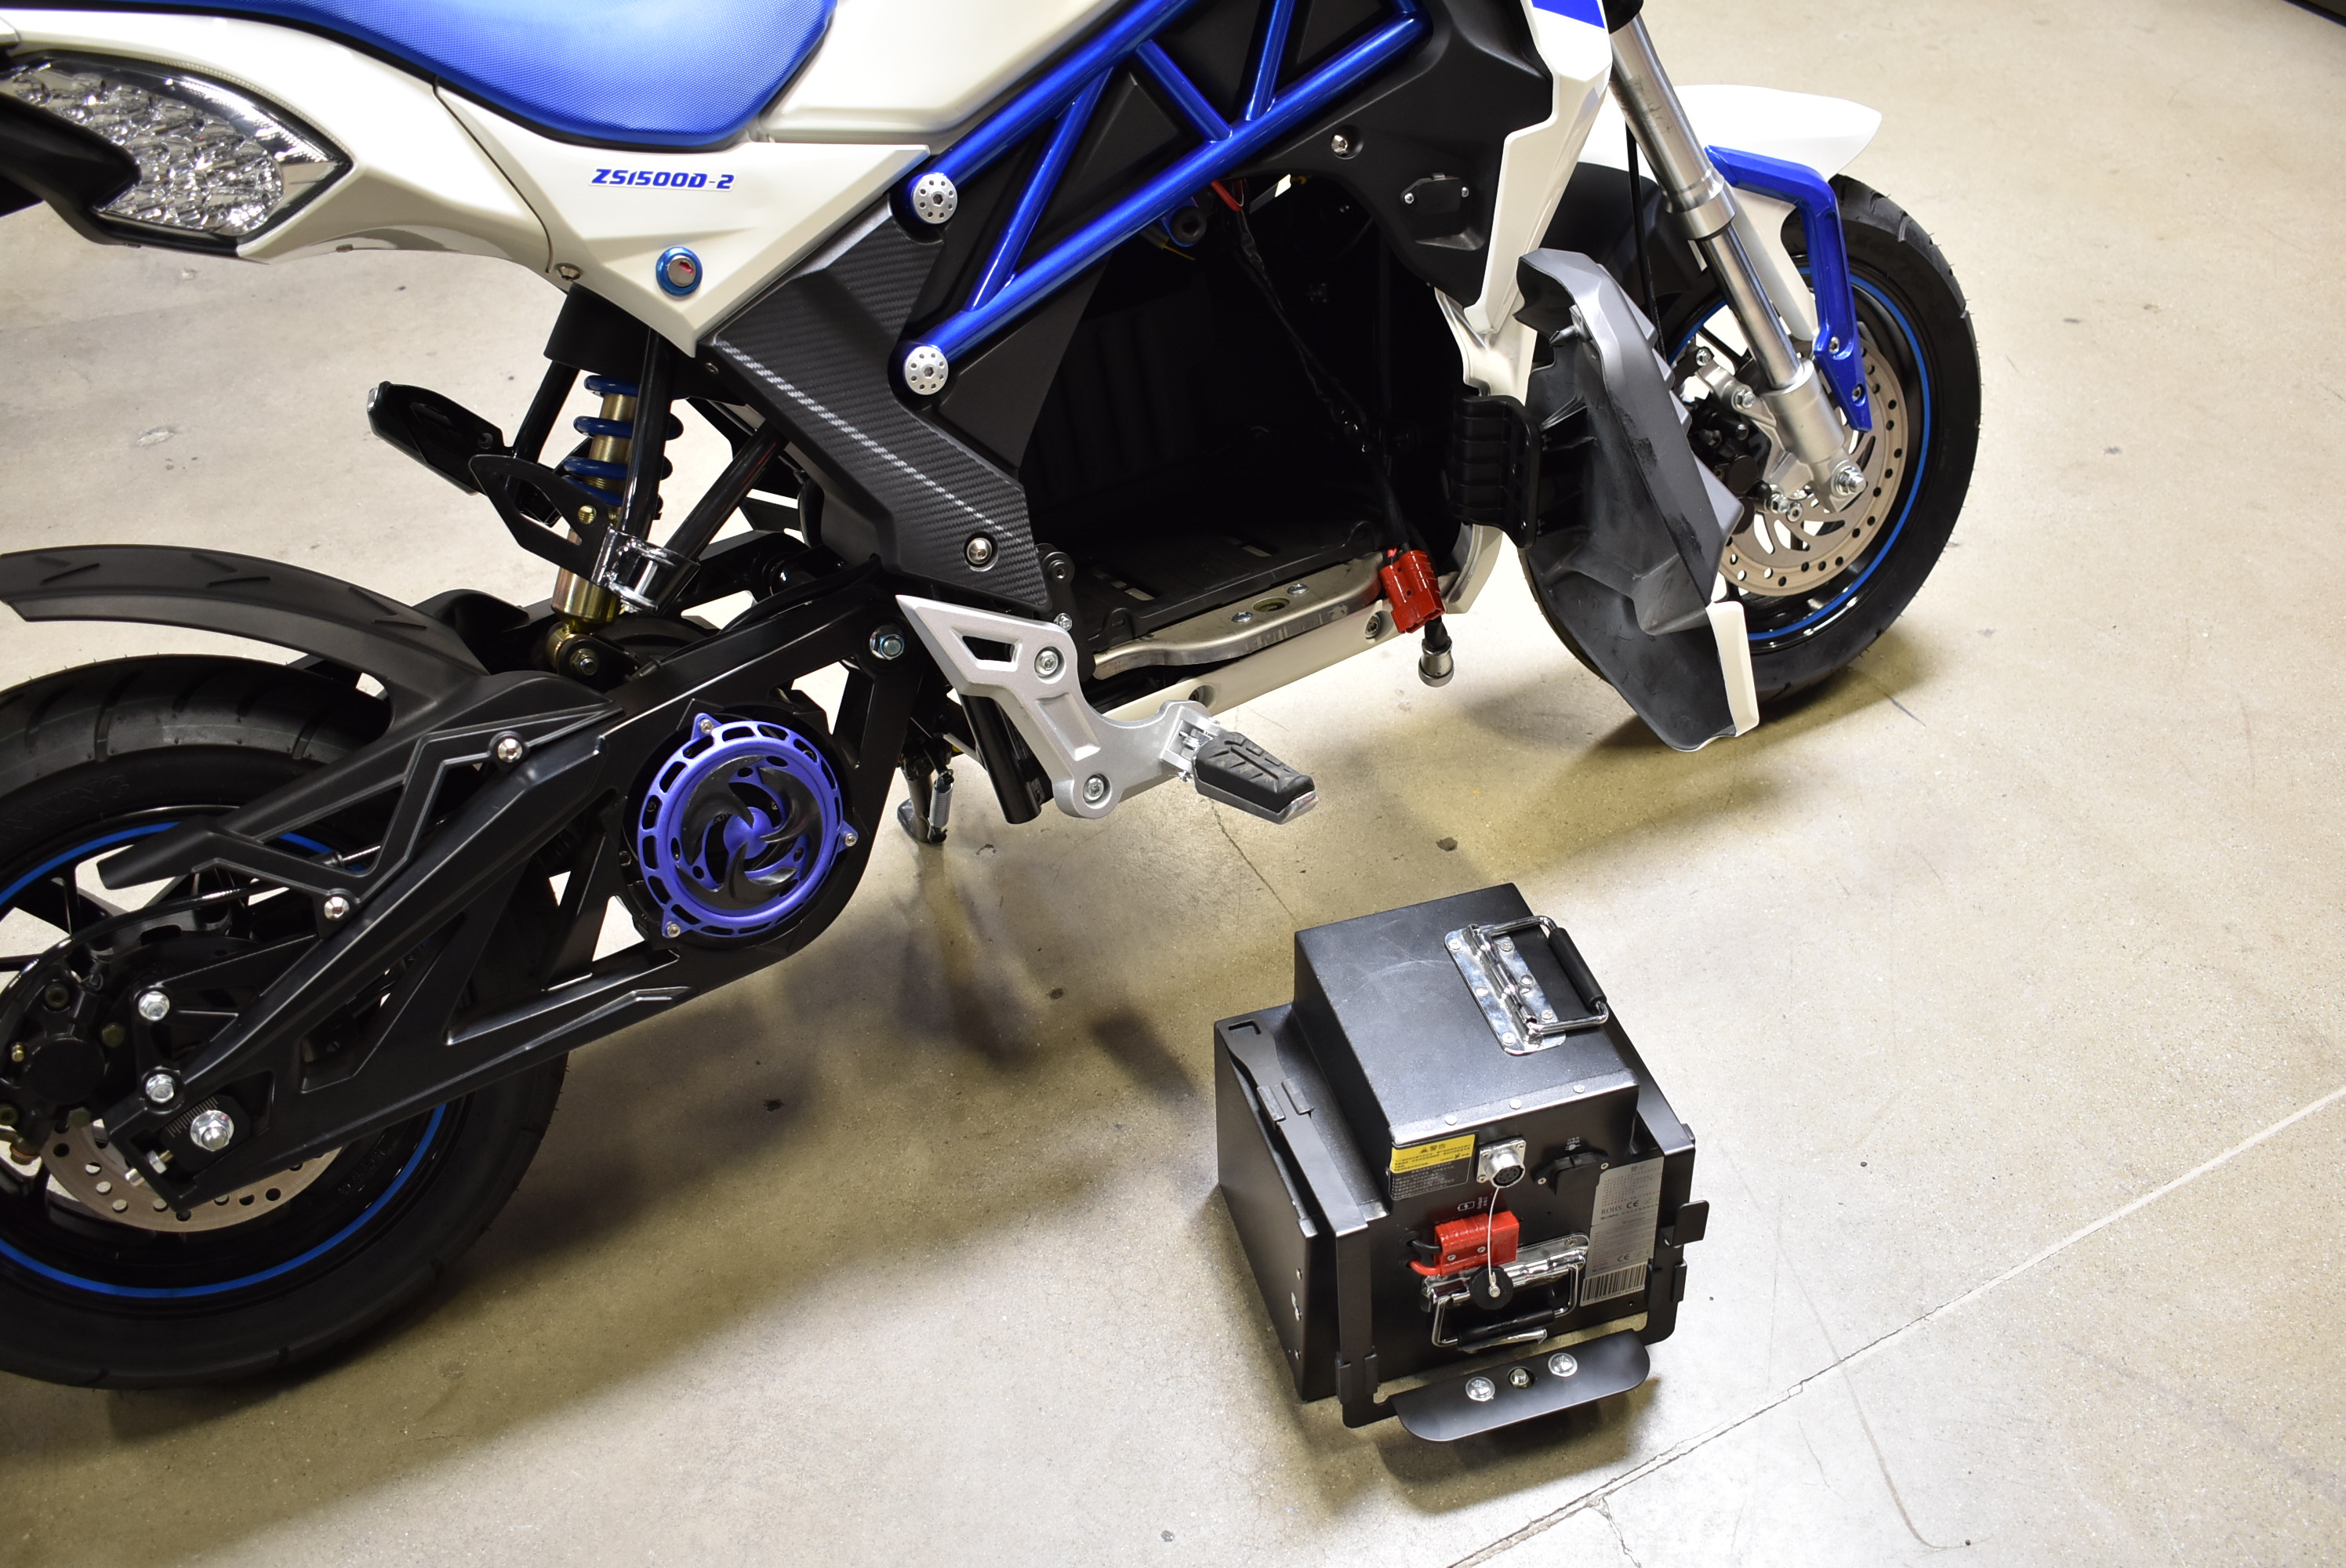 city slicker electric motorcycle